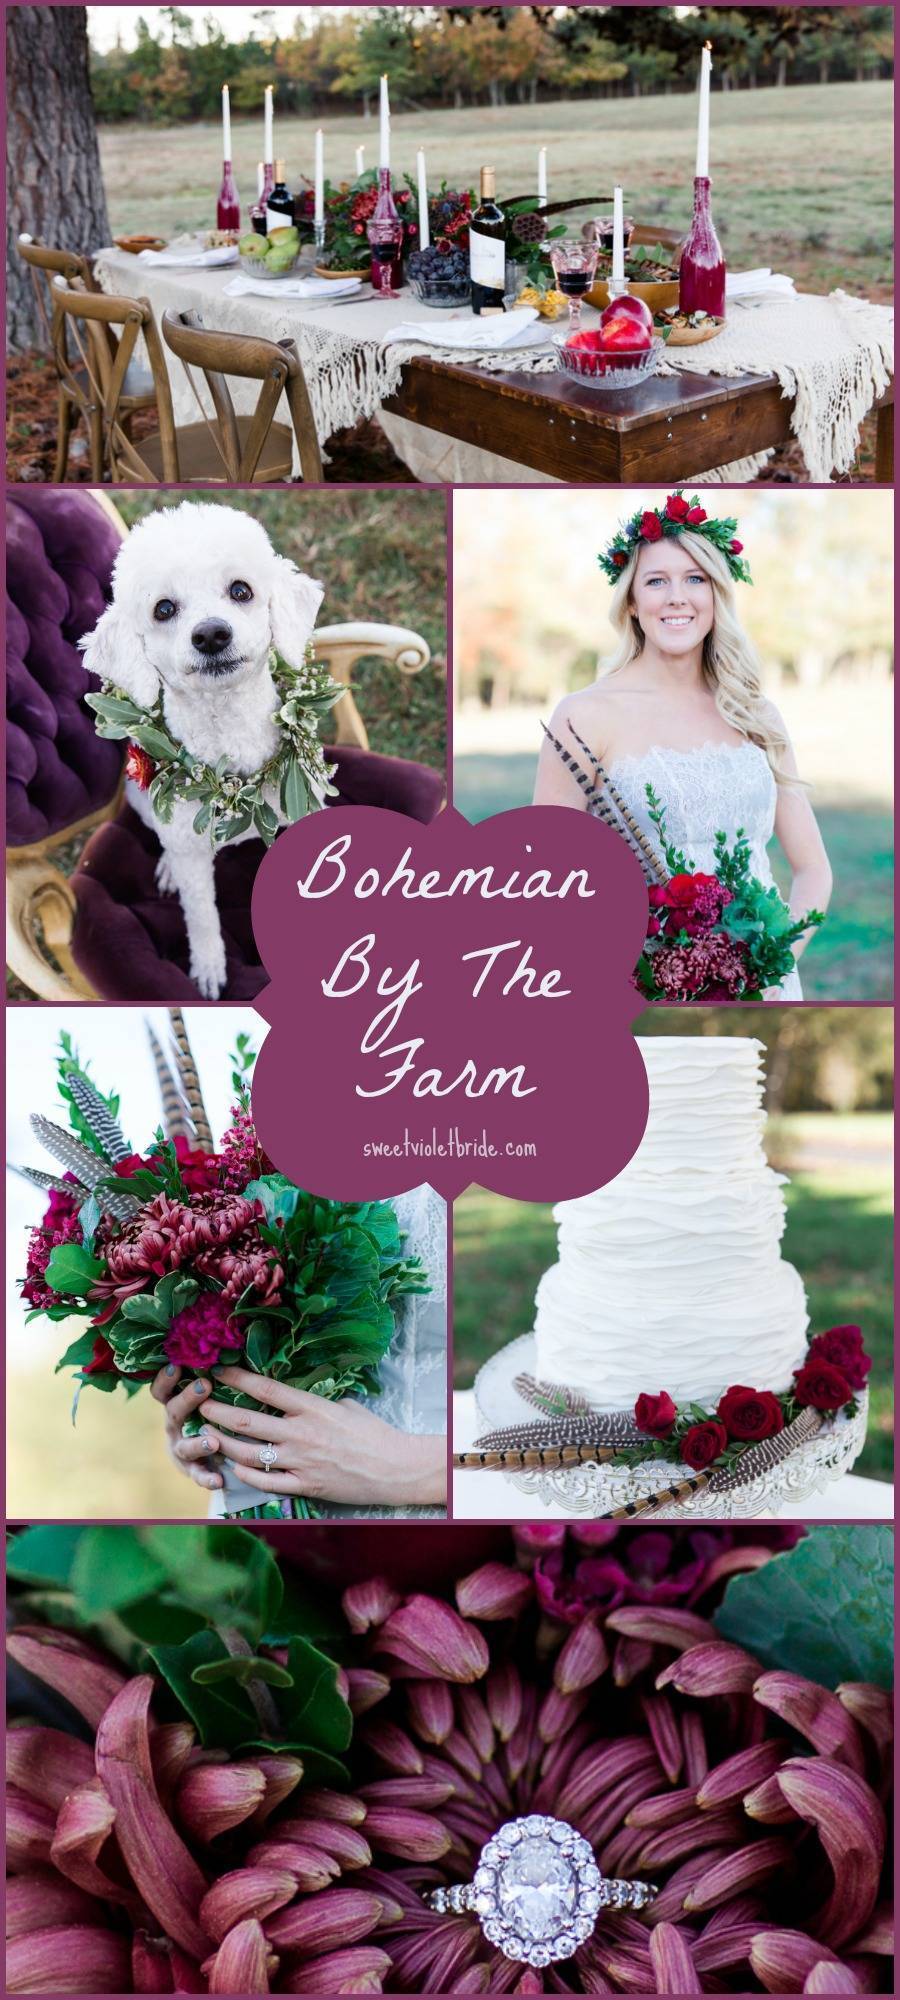 Bohemian By The Farm 49